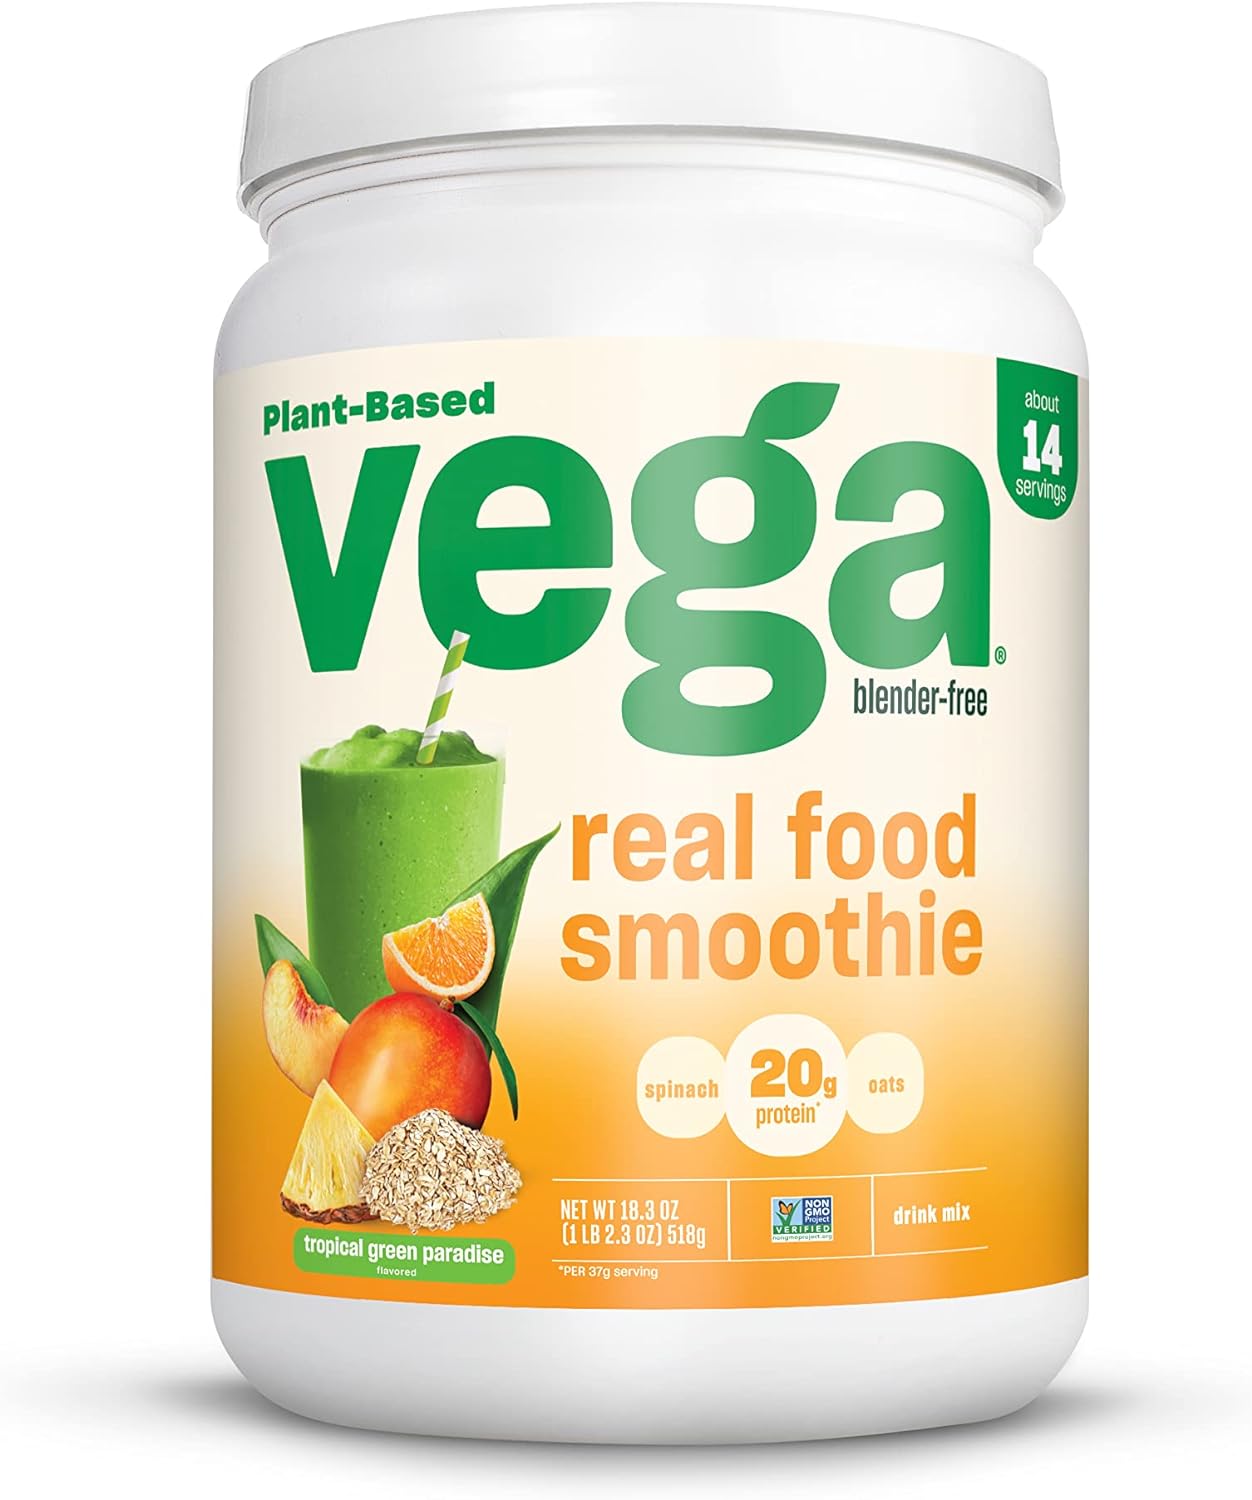 Vega Real Food Smoothie, Tropical Green Paradise - Vegan Protein Powde